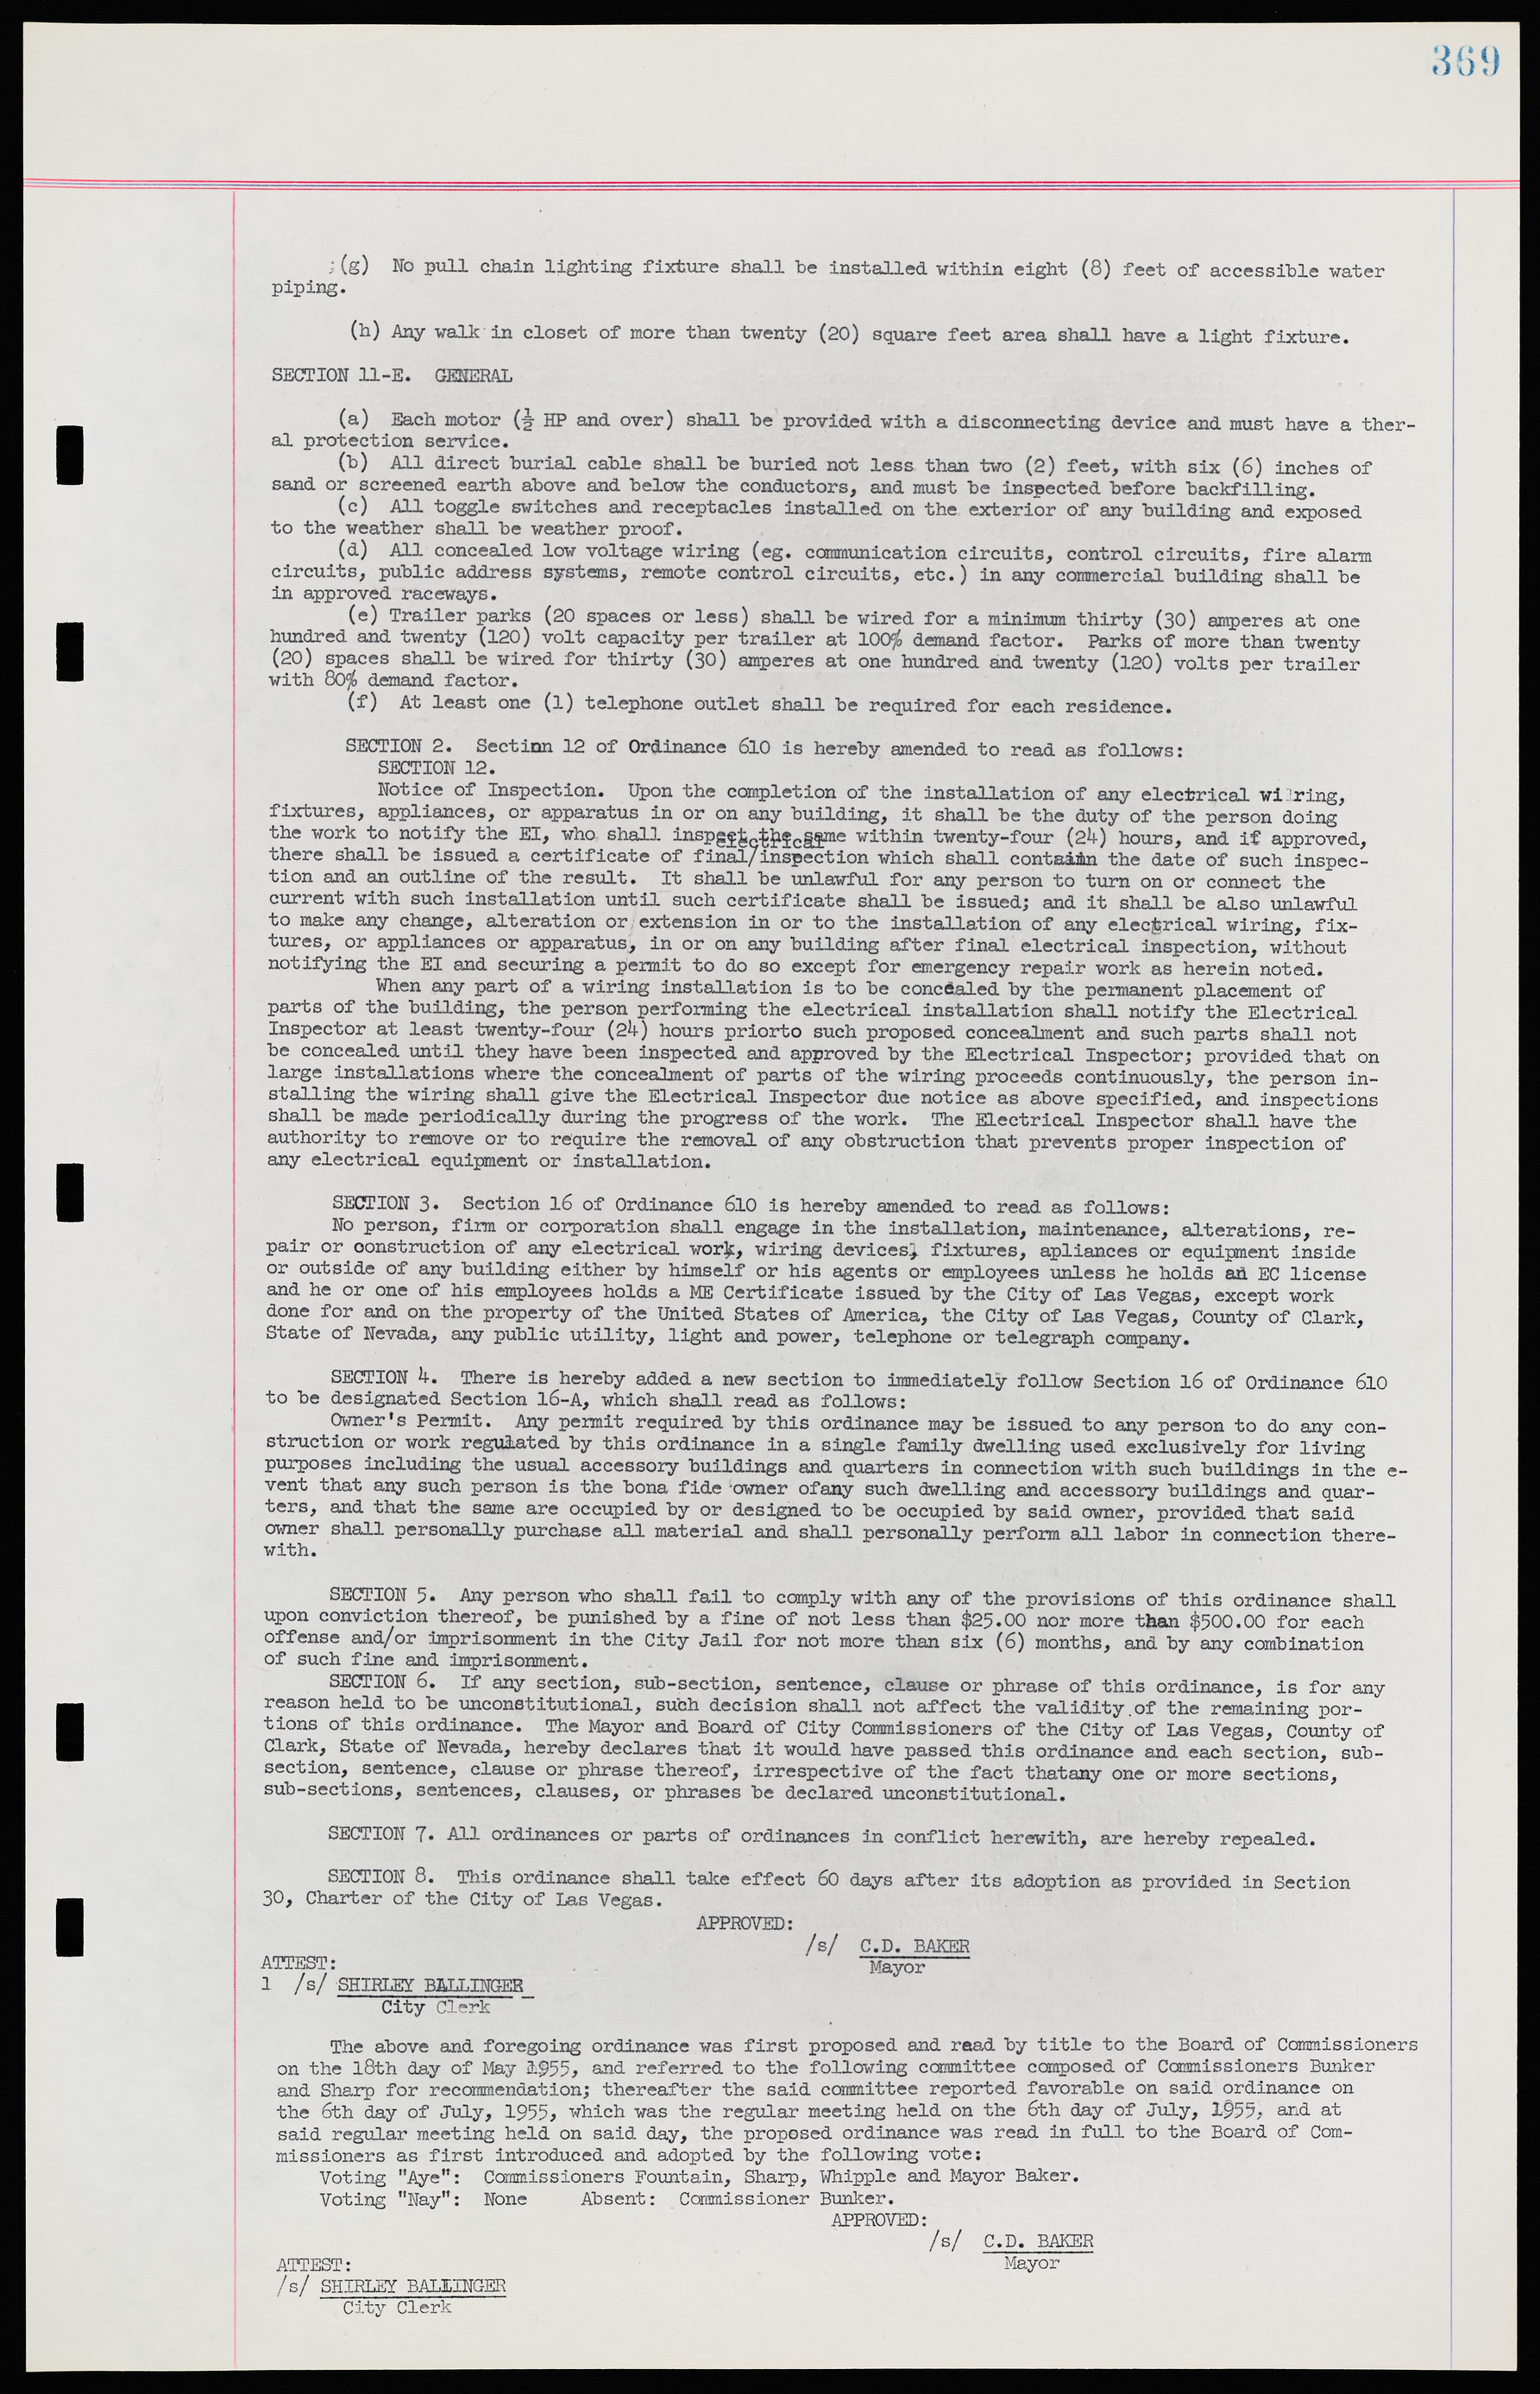 Las Vegas City Ordinances, November 13, 1950 to August 6, 1958, lvc000015-377